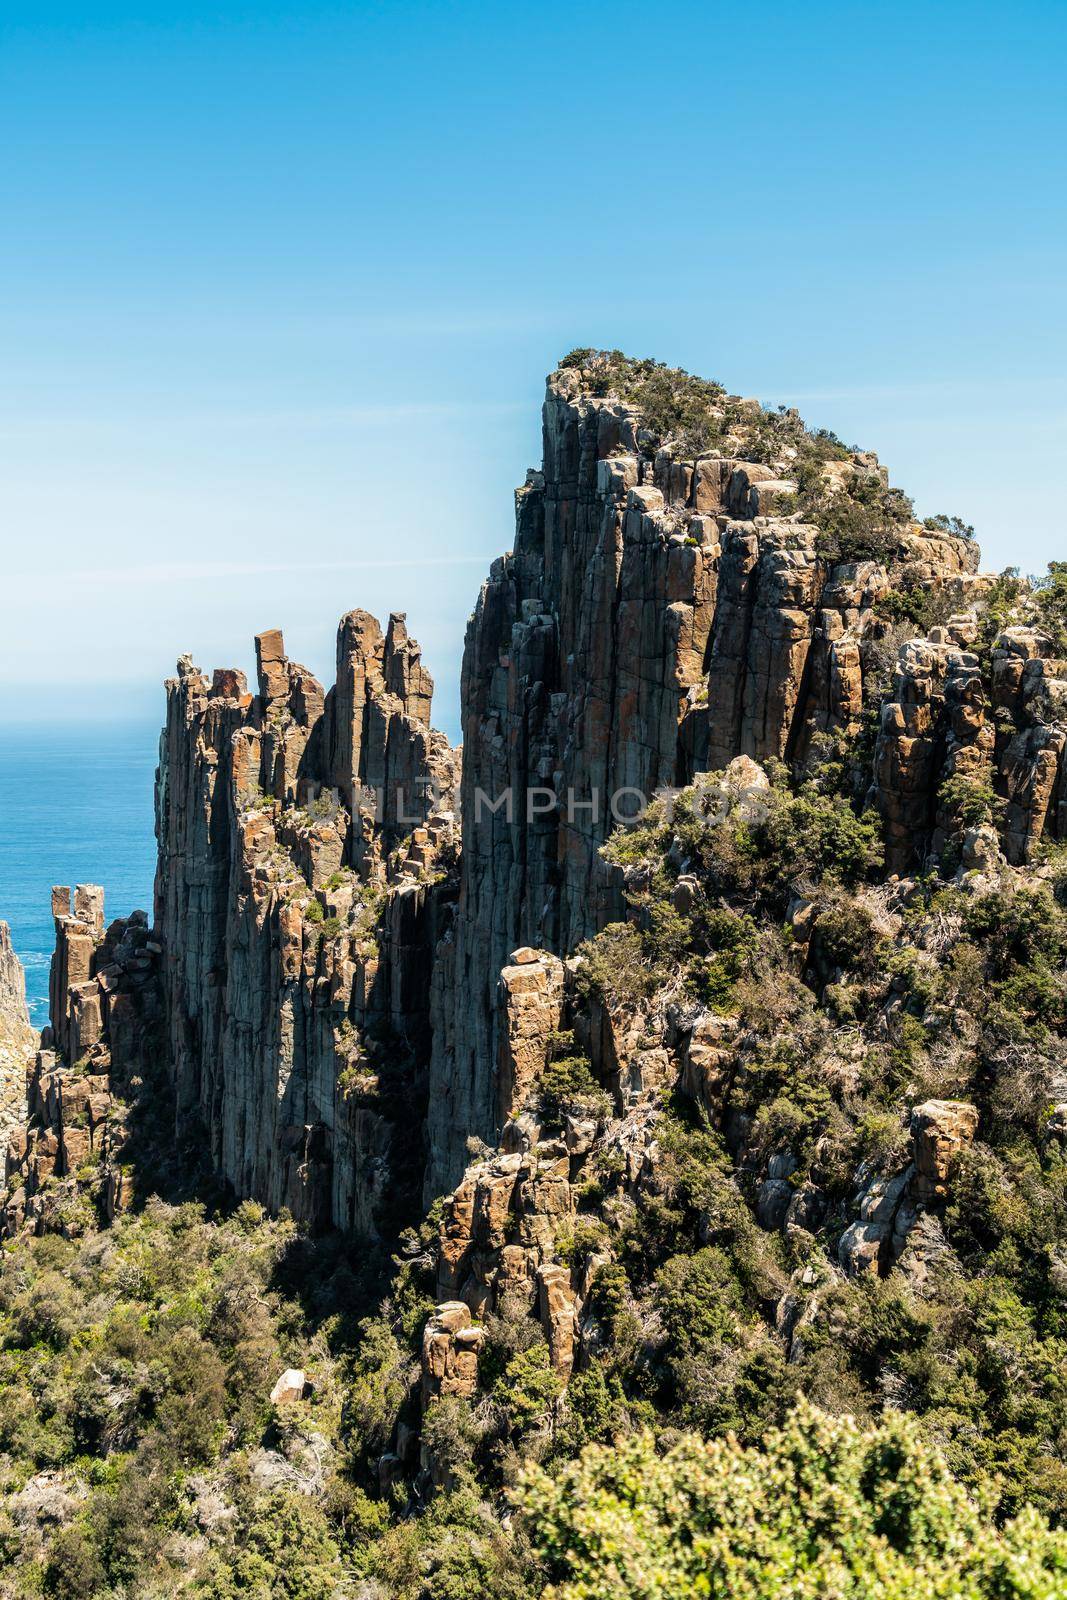 Landscape of Tasman peninsula, Tasmania, Australia by biancoblue